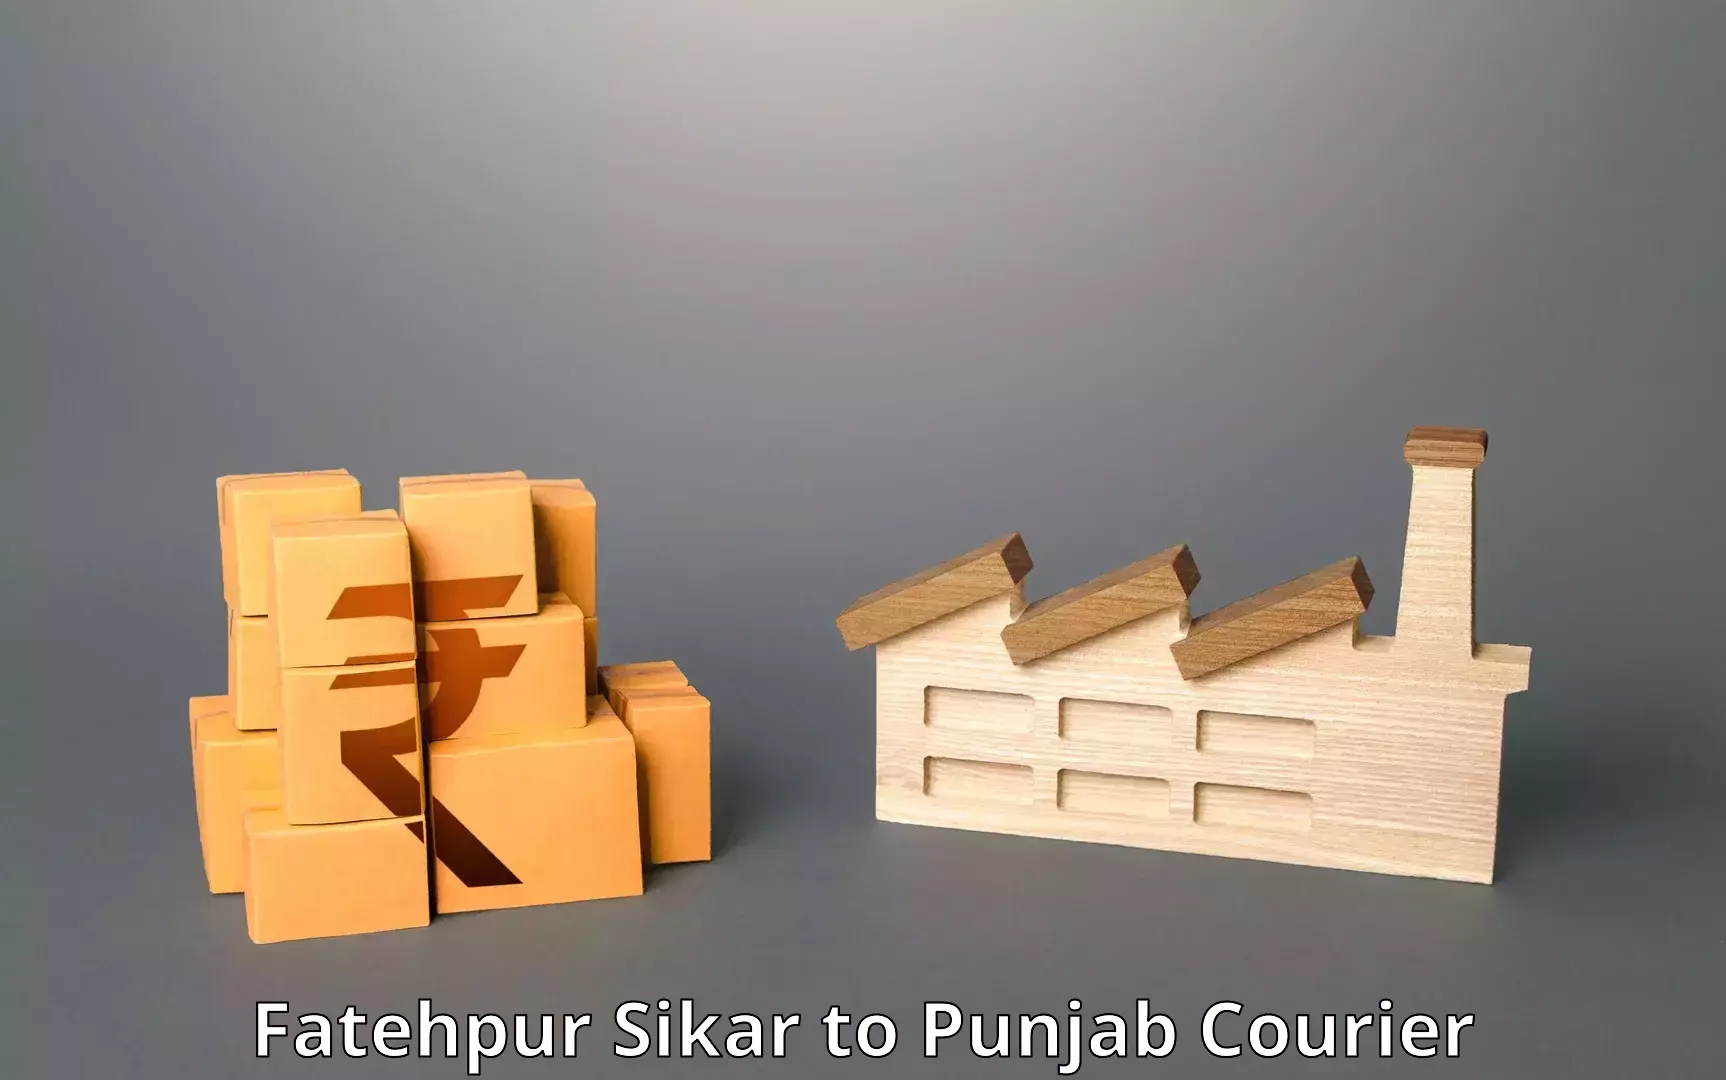 Advanced shipping technology Fatehpur Sikar to Punjab